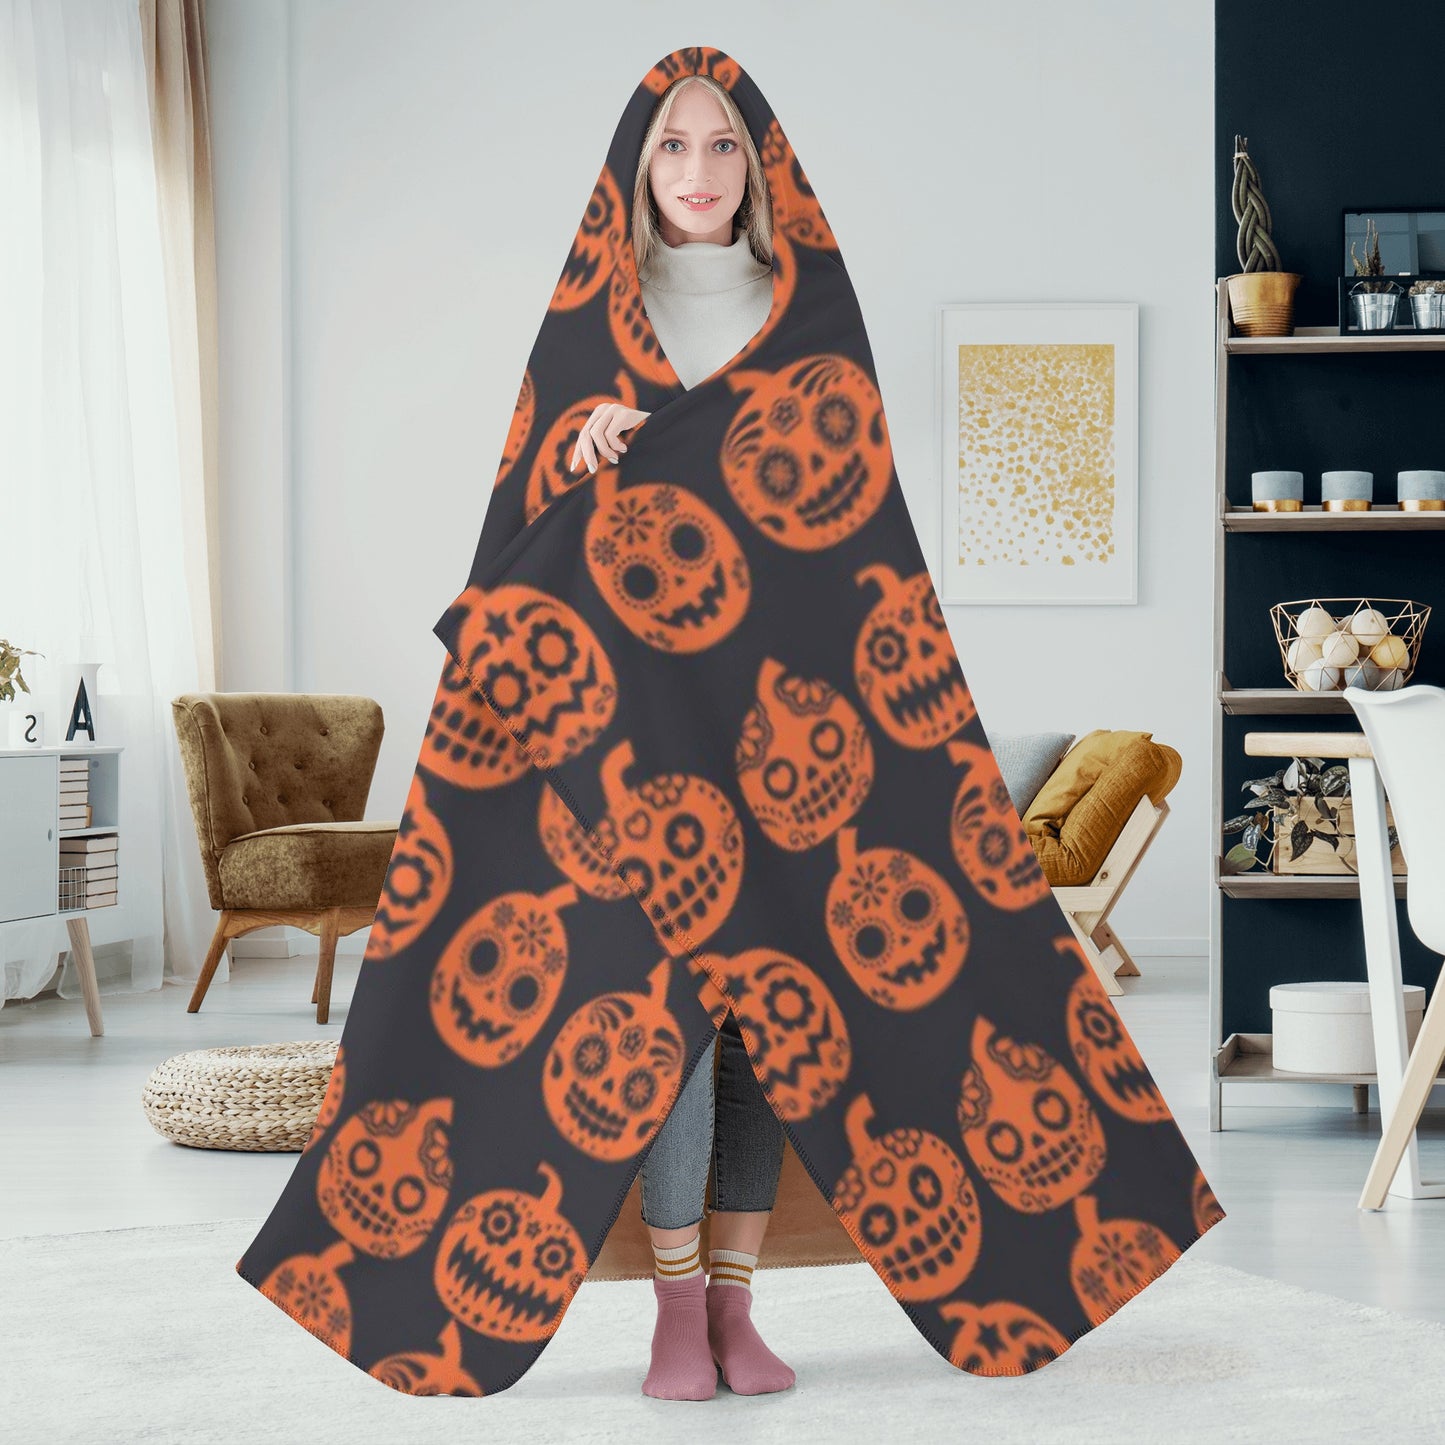 Halloween sugar skull pumpkin Hooded Blanket